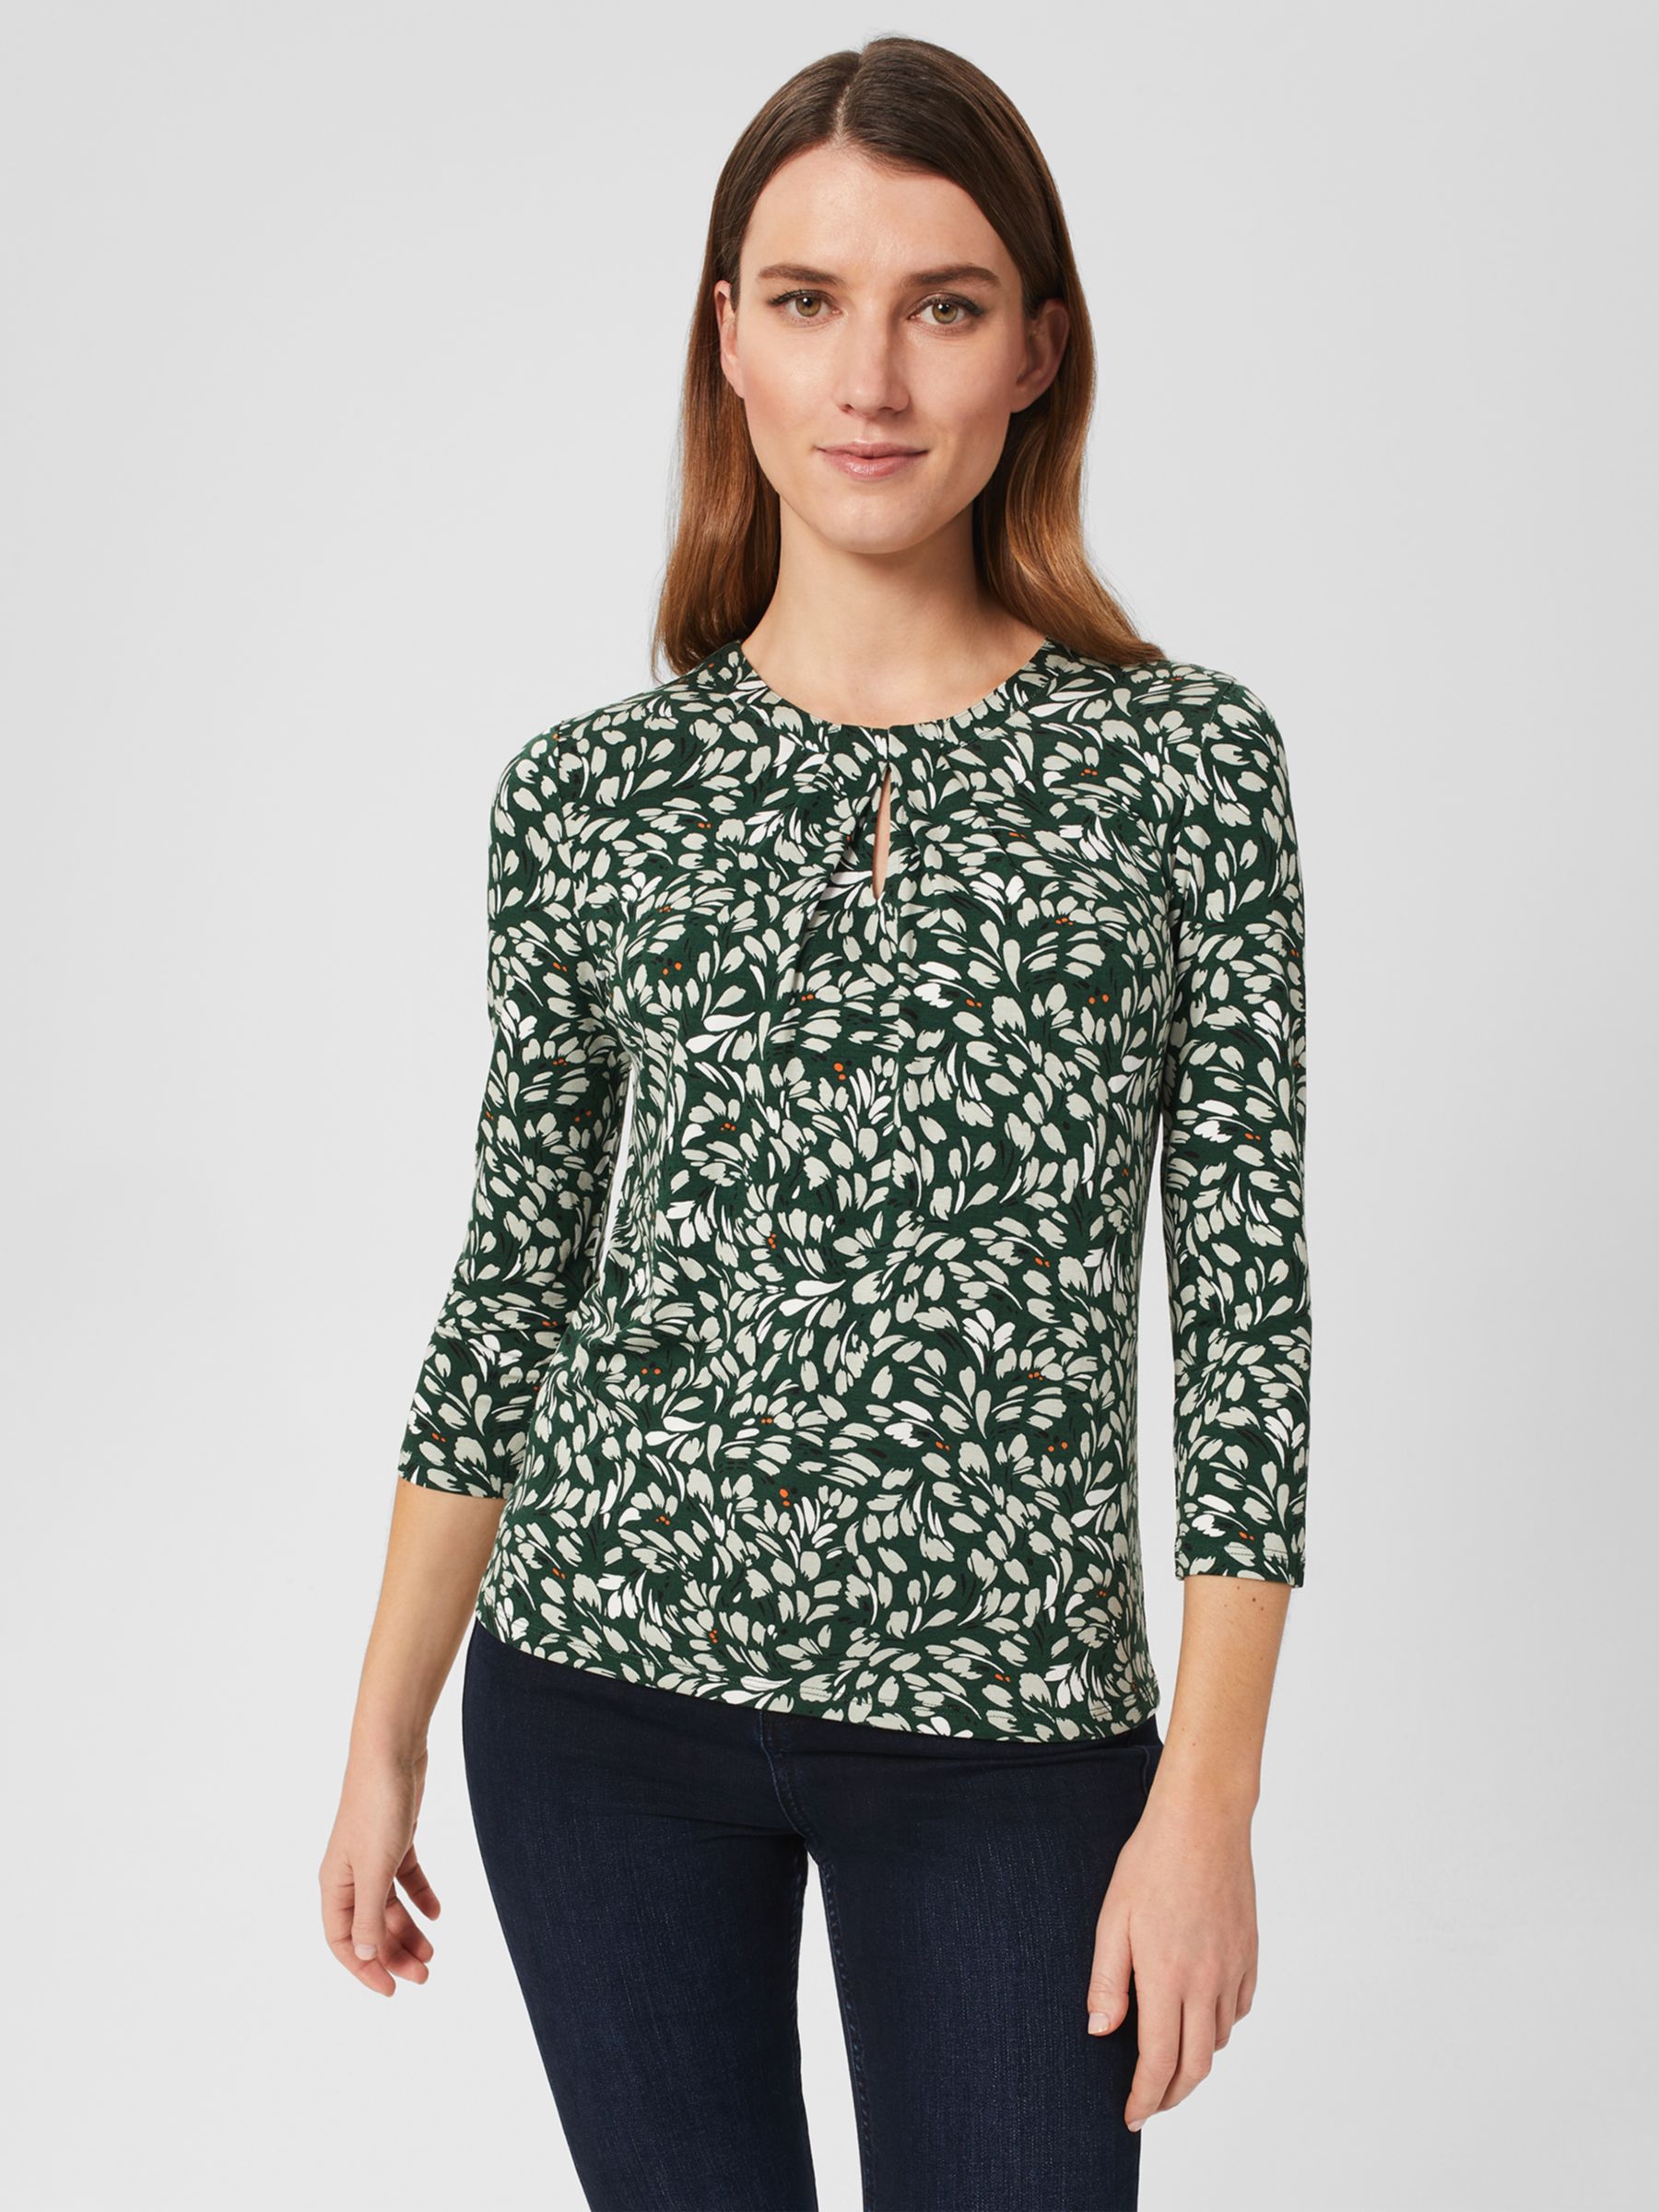 Hobbs Julia Floral Print Jersey Top, Green/Multi, XS